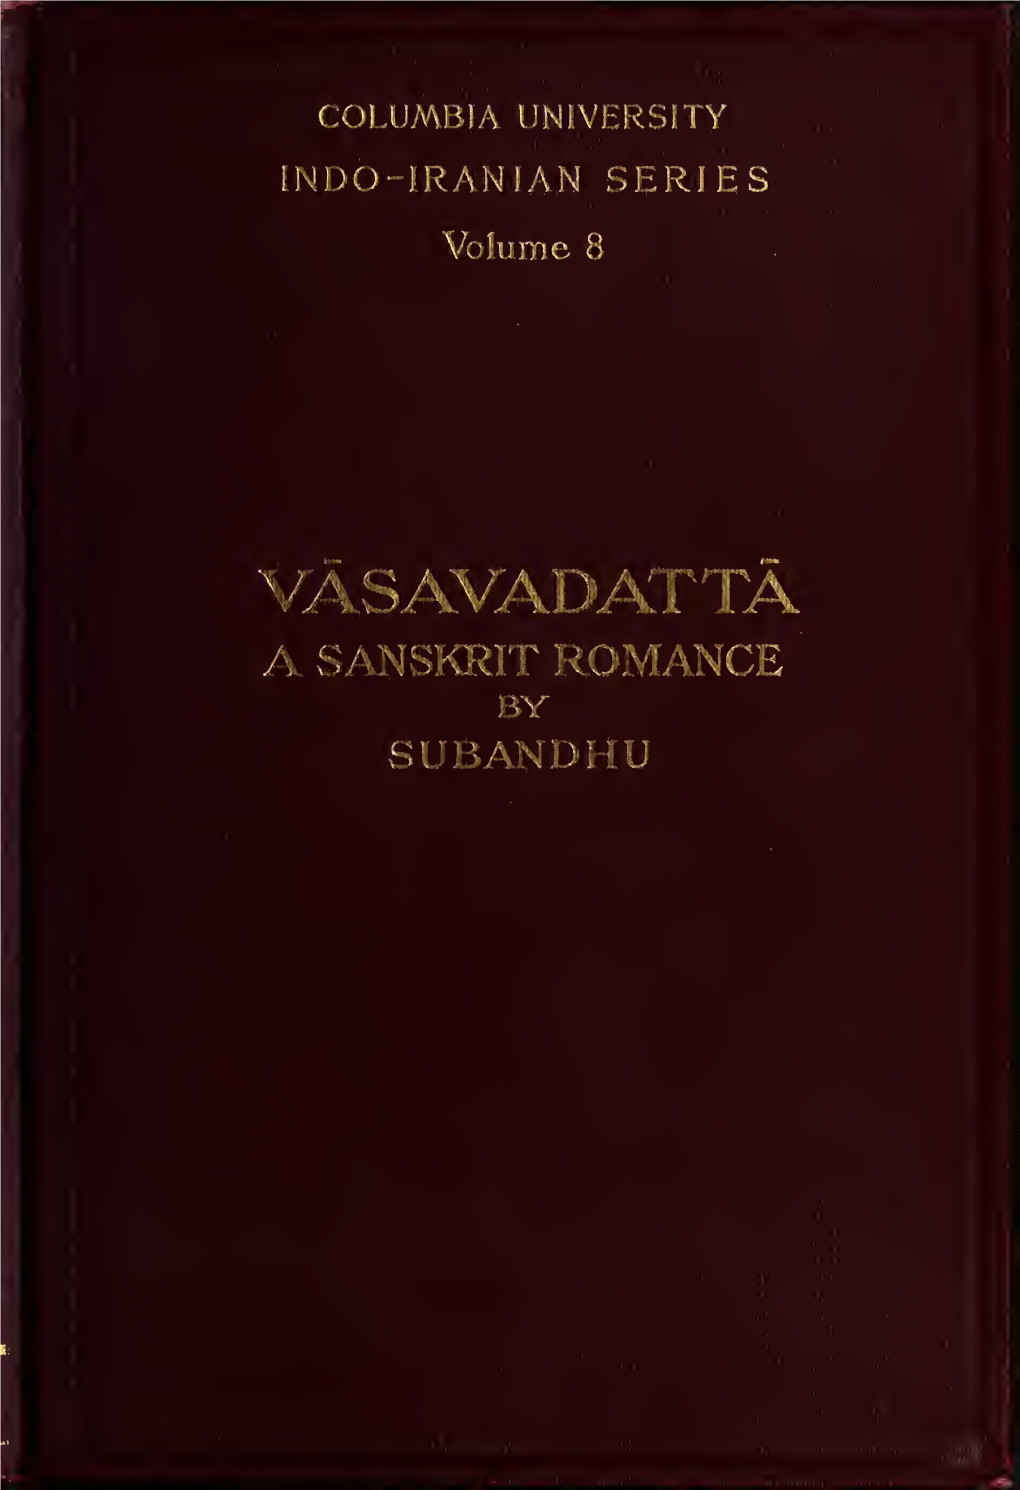 Vāsavadatta, a Sanskrit Romance